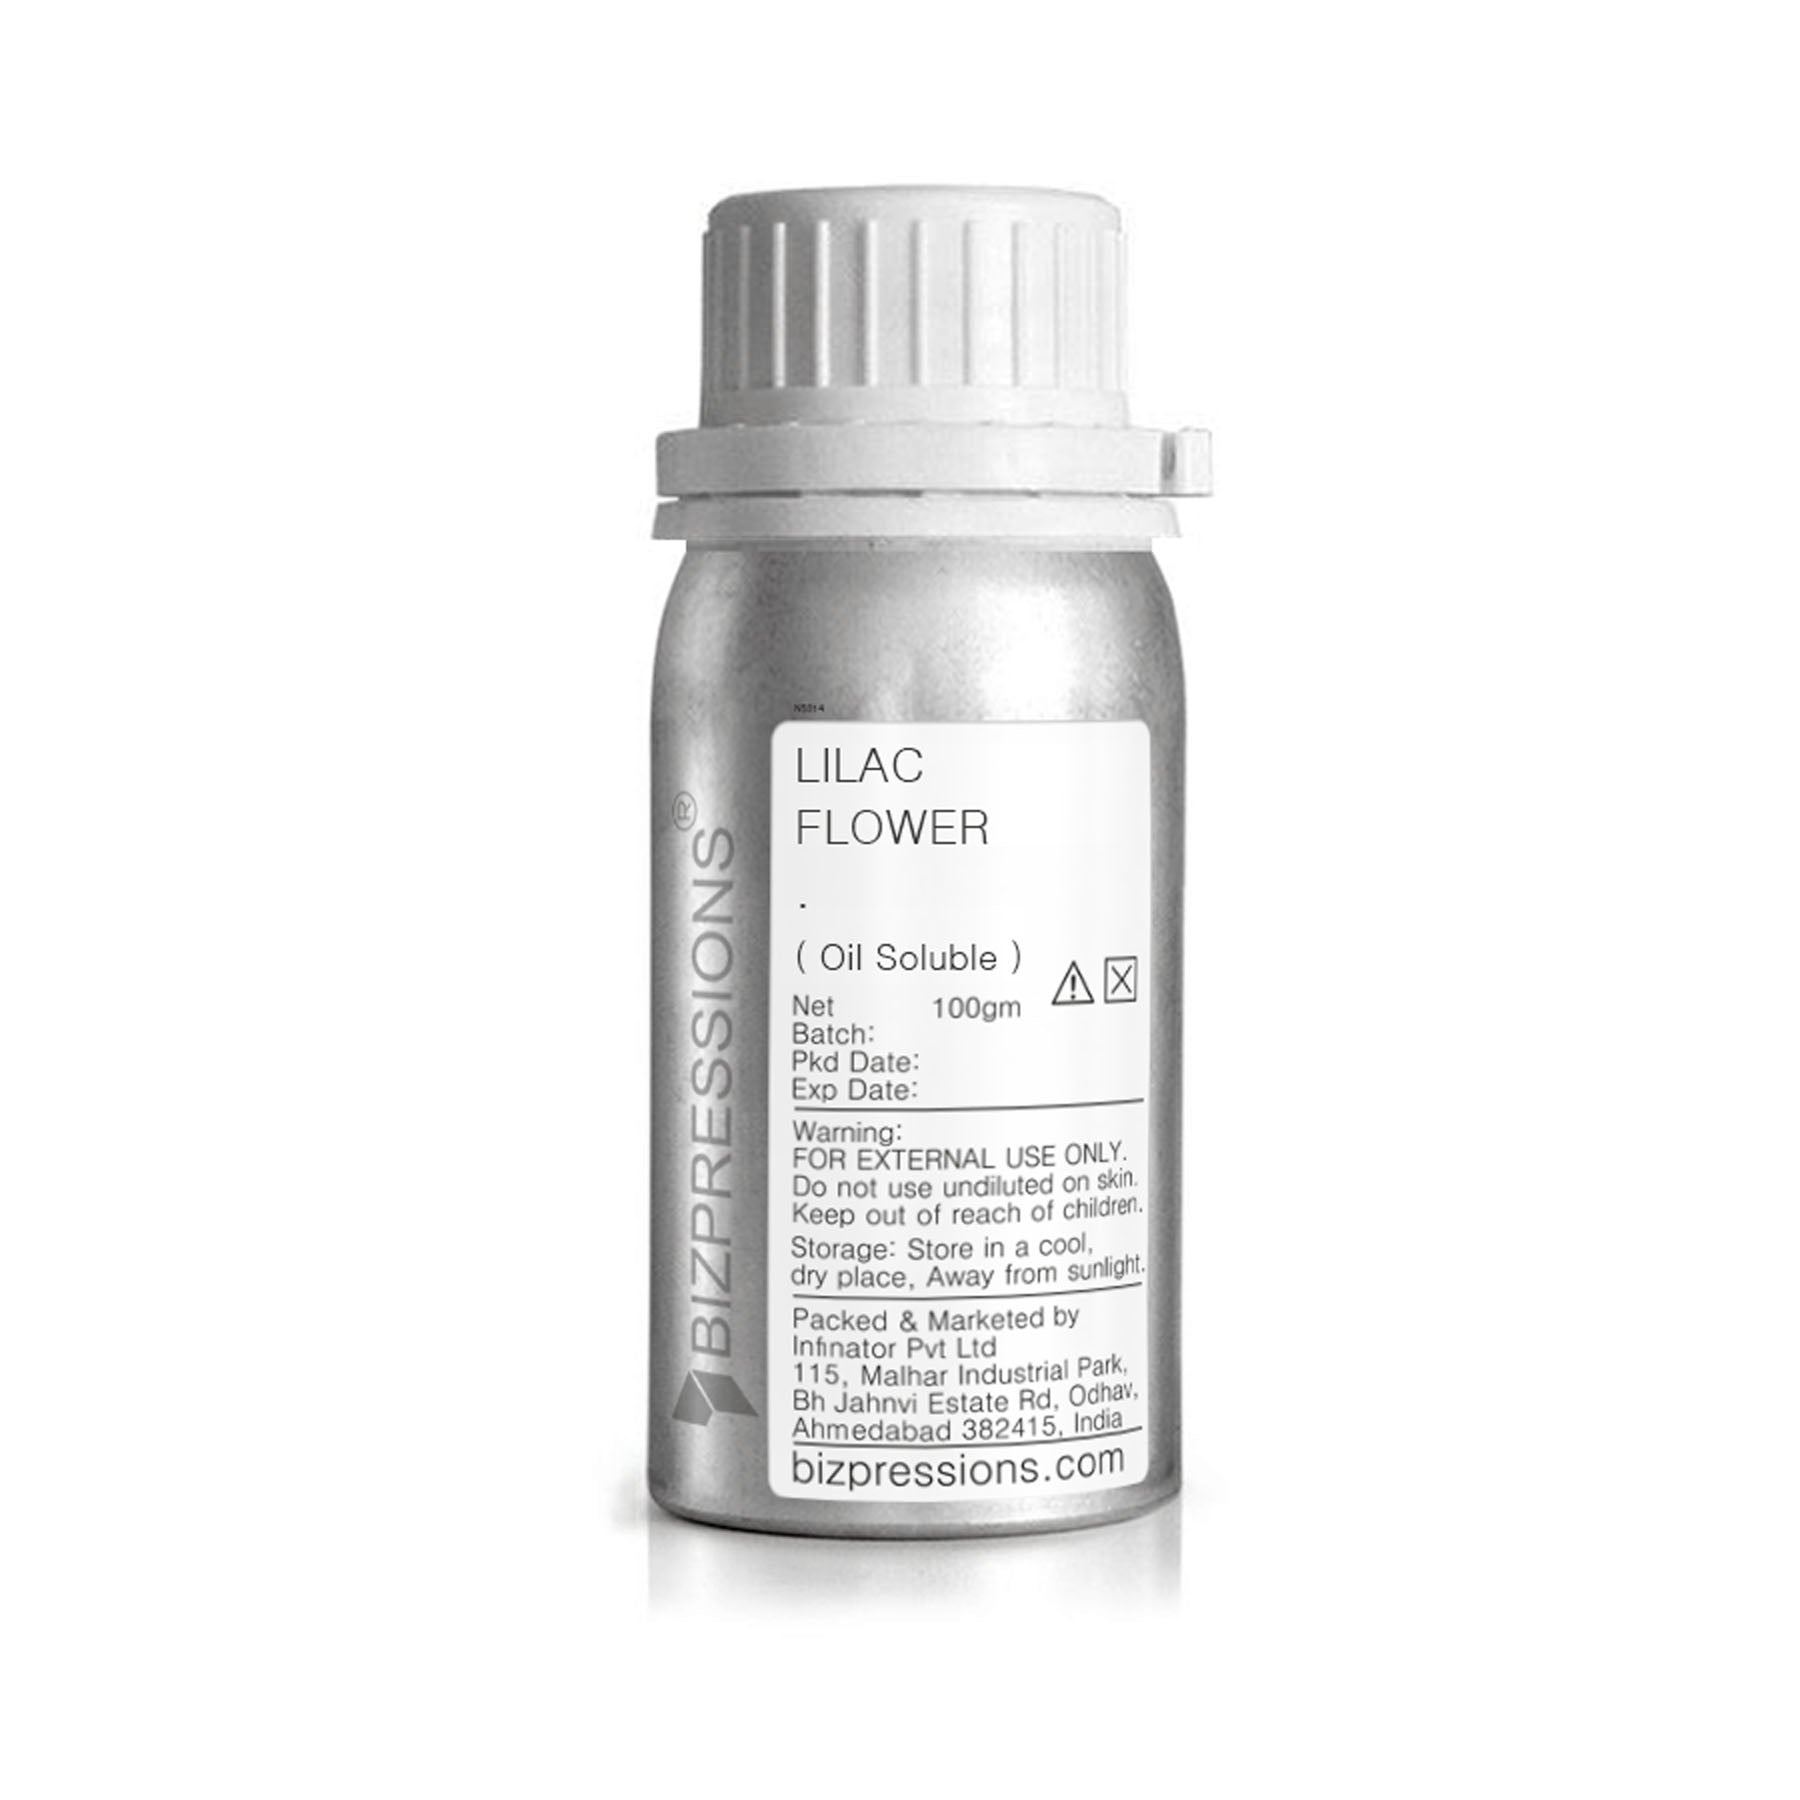 LILAC FLOWER - Fragrance ( Oil Soluble )